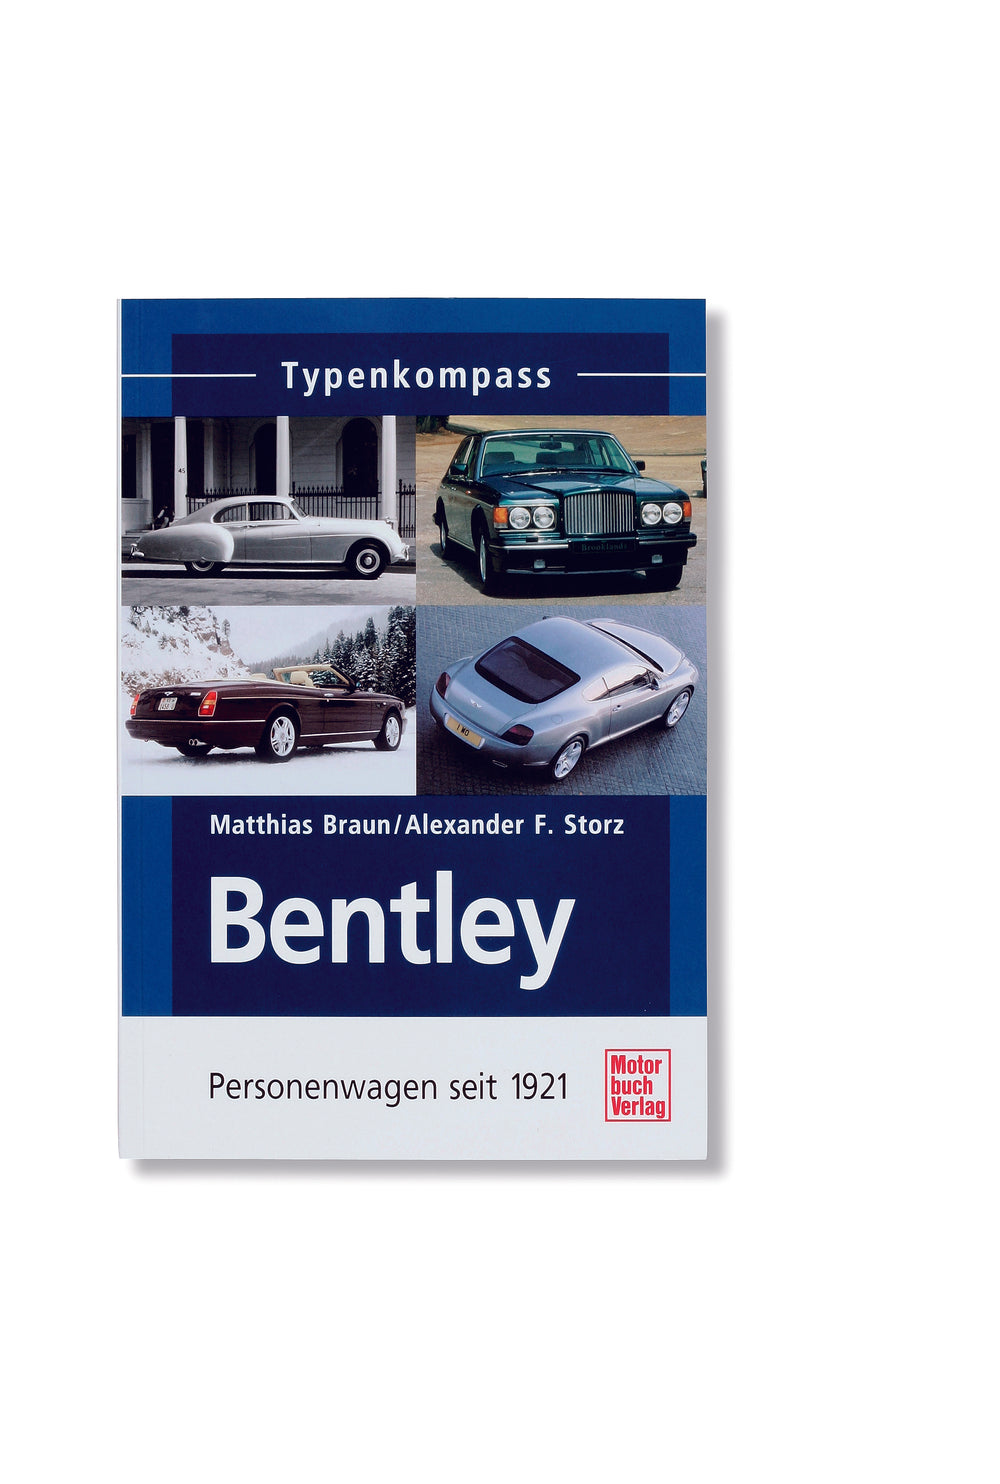 BOOK FILE 3-1:Bentley: Personenwagen seit 1921